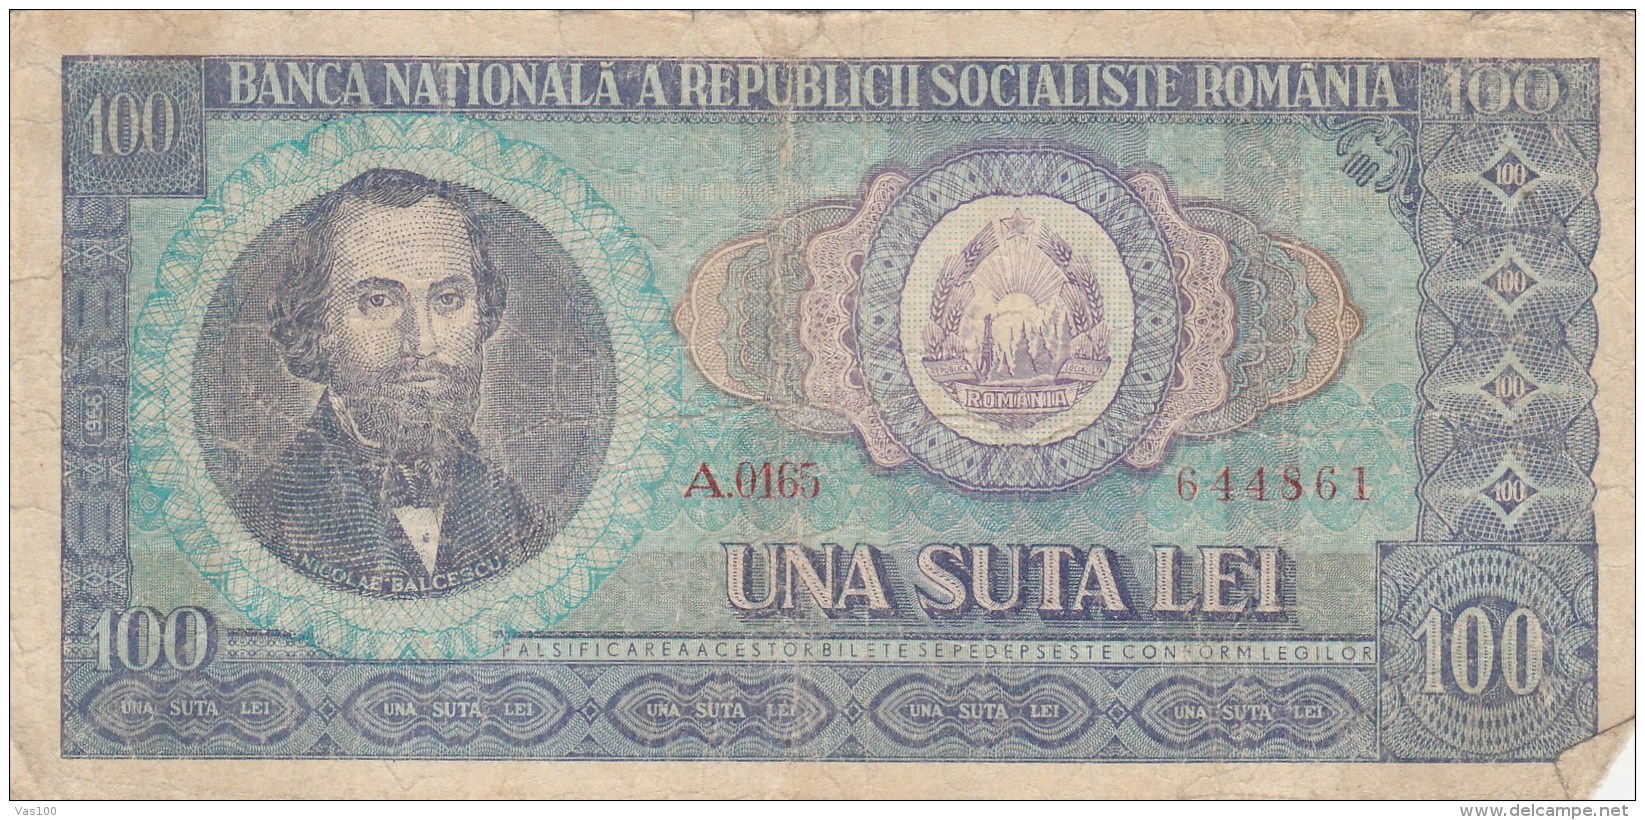 100 LEI, NICOLAE BALCESCU, SOCIALIST REPUBLIC OF ROMANIA,1966,ROMANIA. - Rumänien